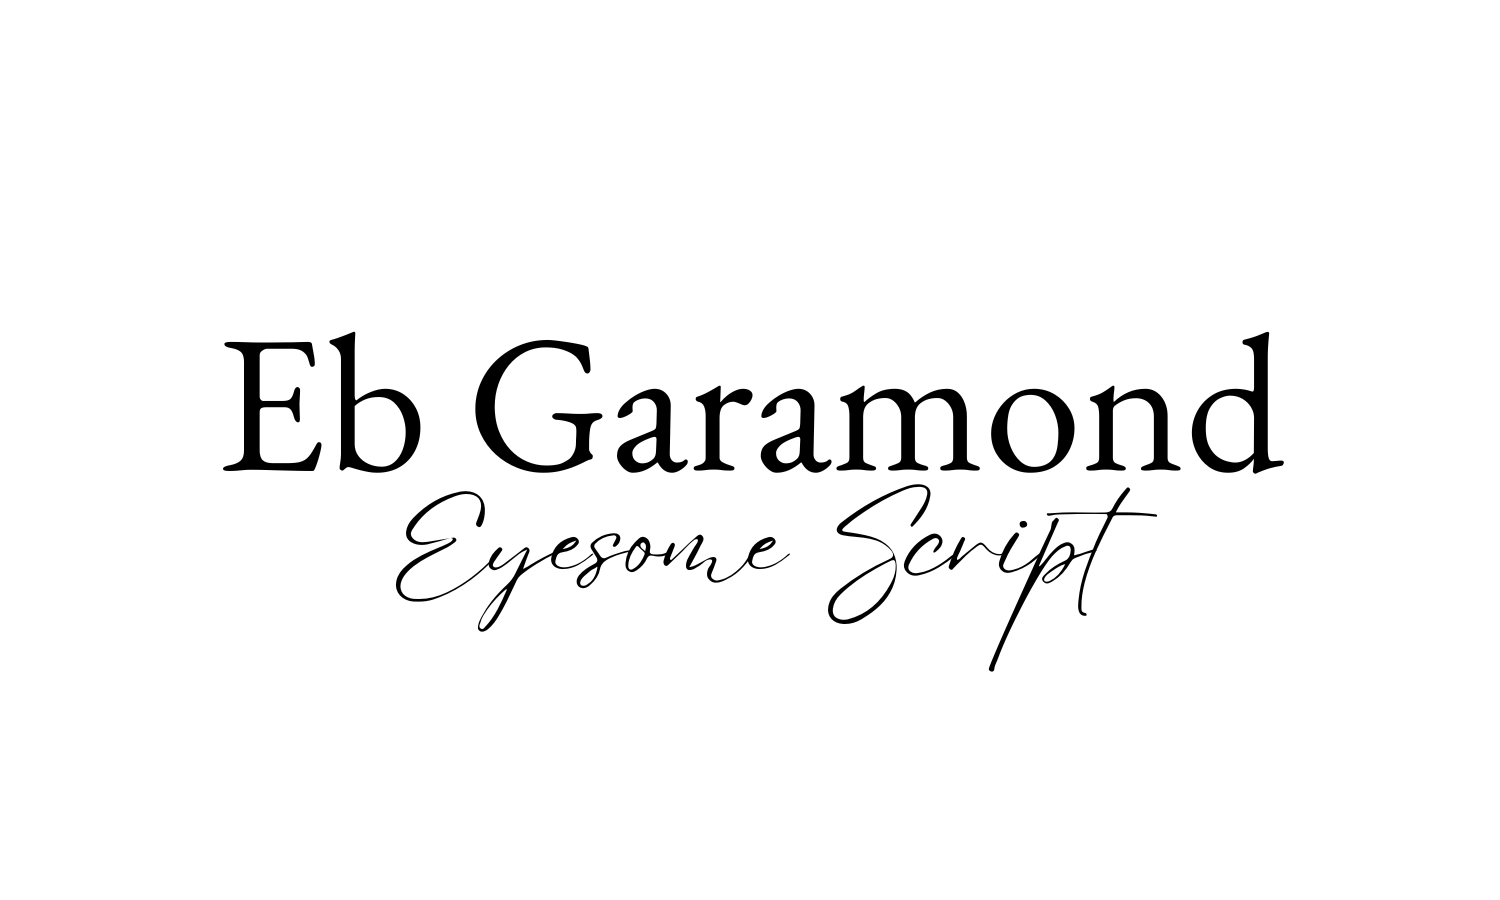 eb garamond eyesome script font combo